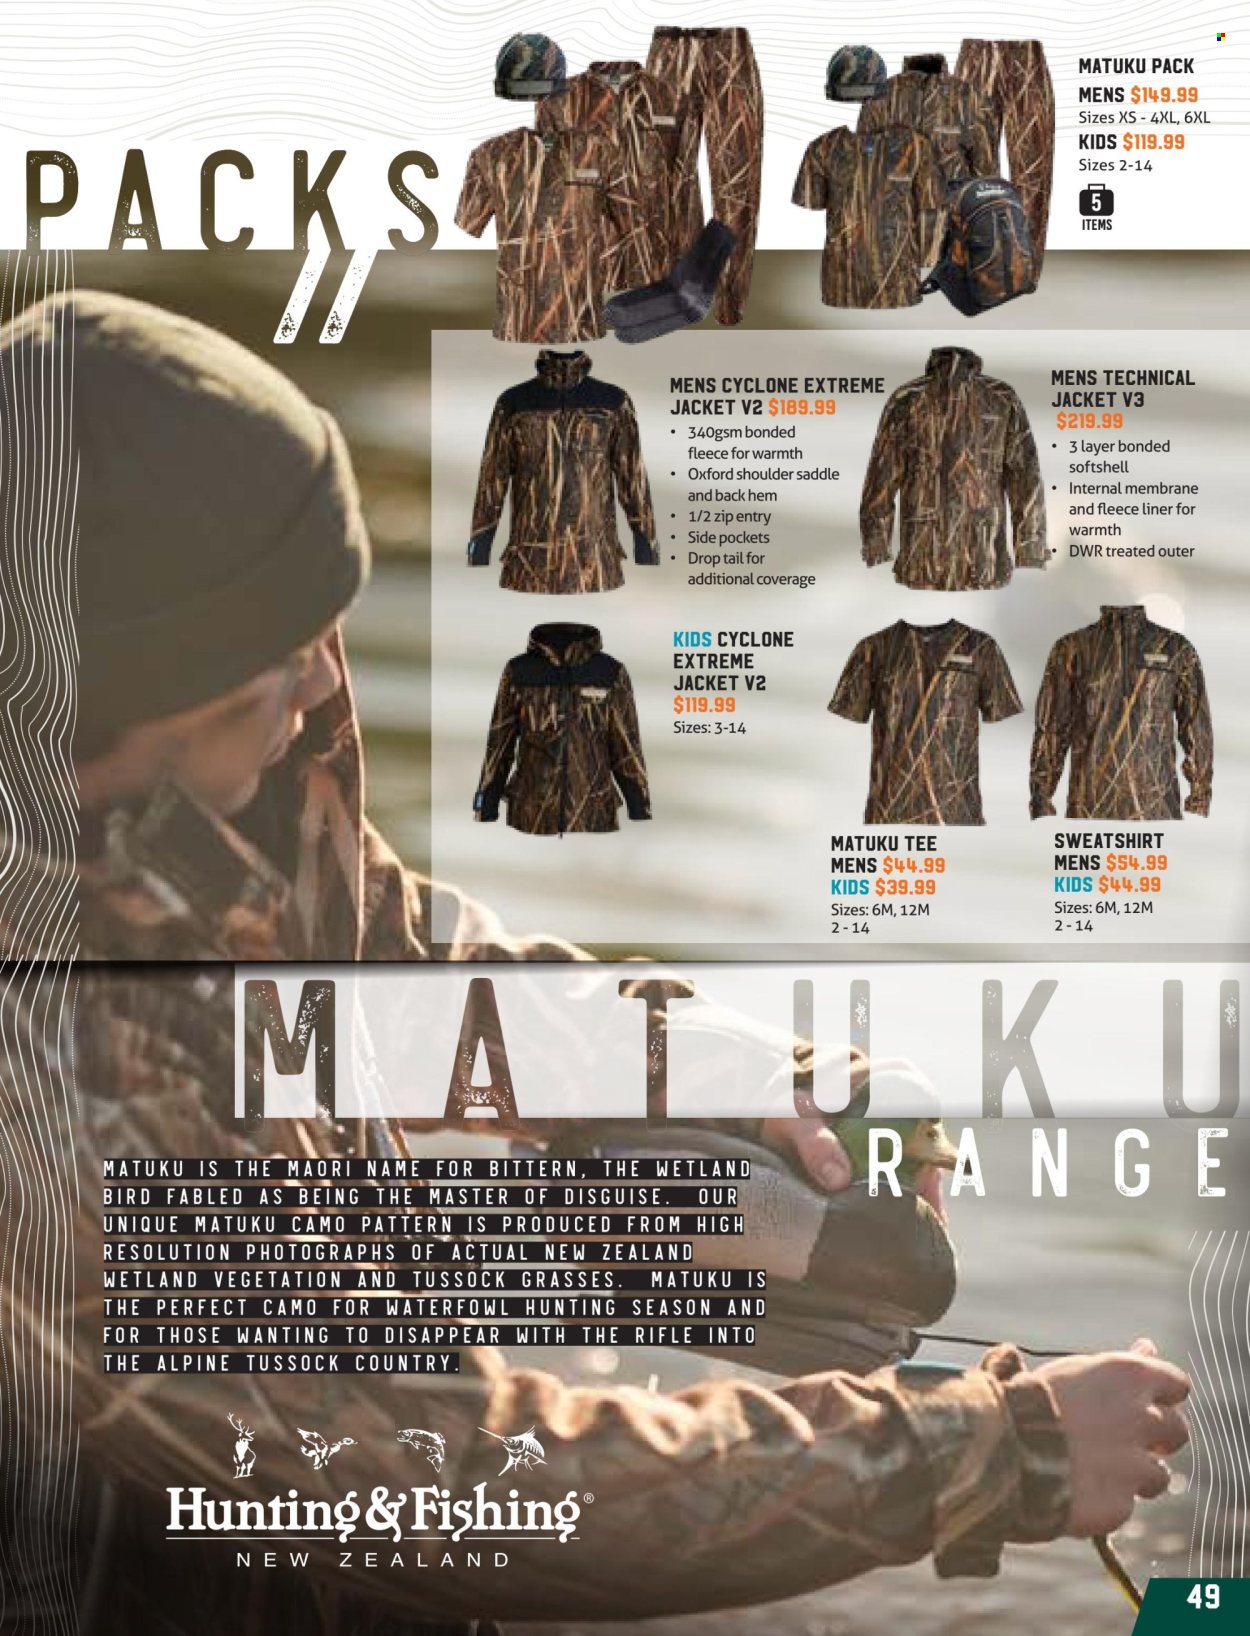 Buy Hunting & Fishing Kids Cyclone Extreme Jacket - Matuku